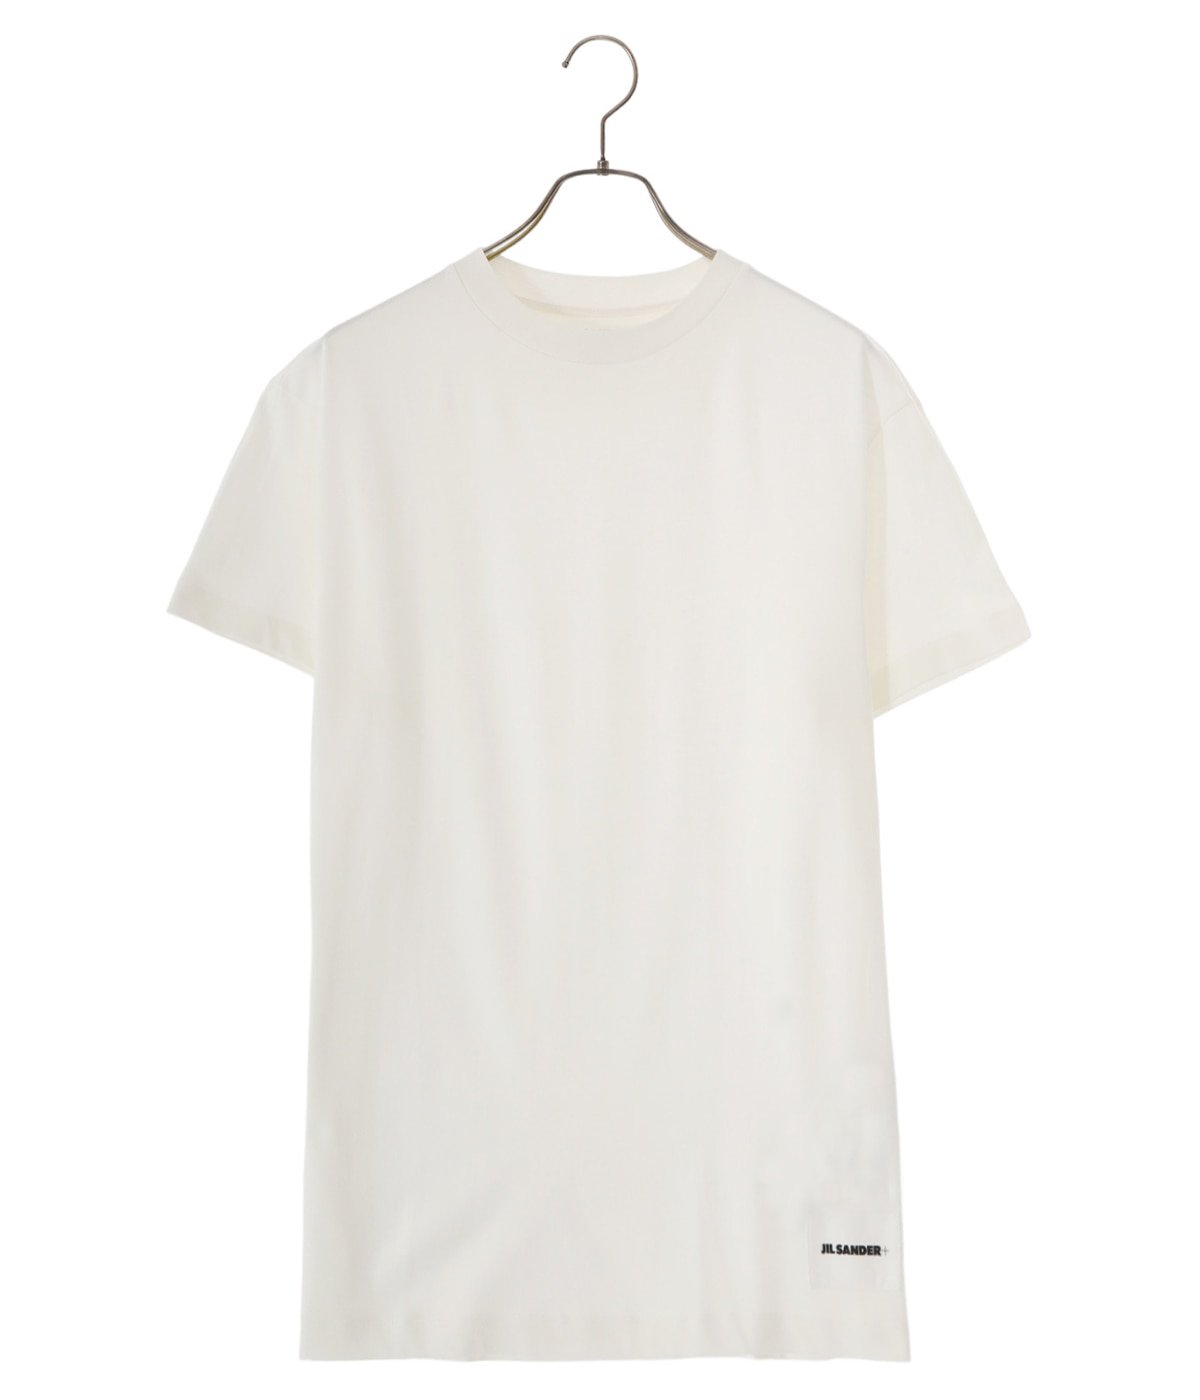 Jil Sander+ 3-Pack Tee ジルサンダー パック Tシャツ71cm身幅